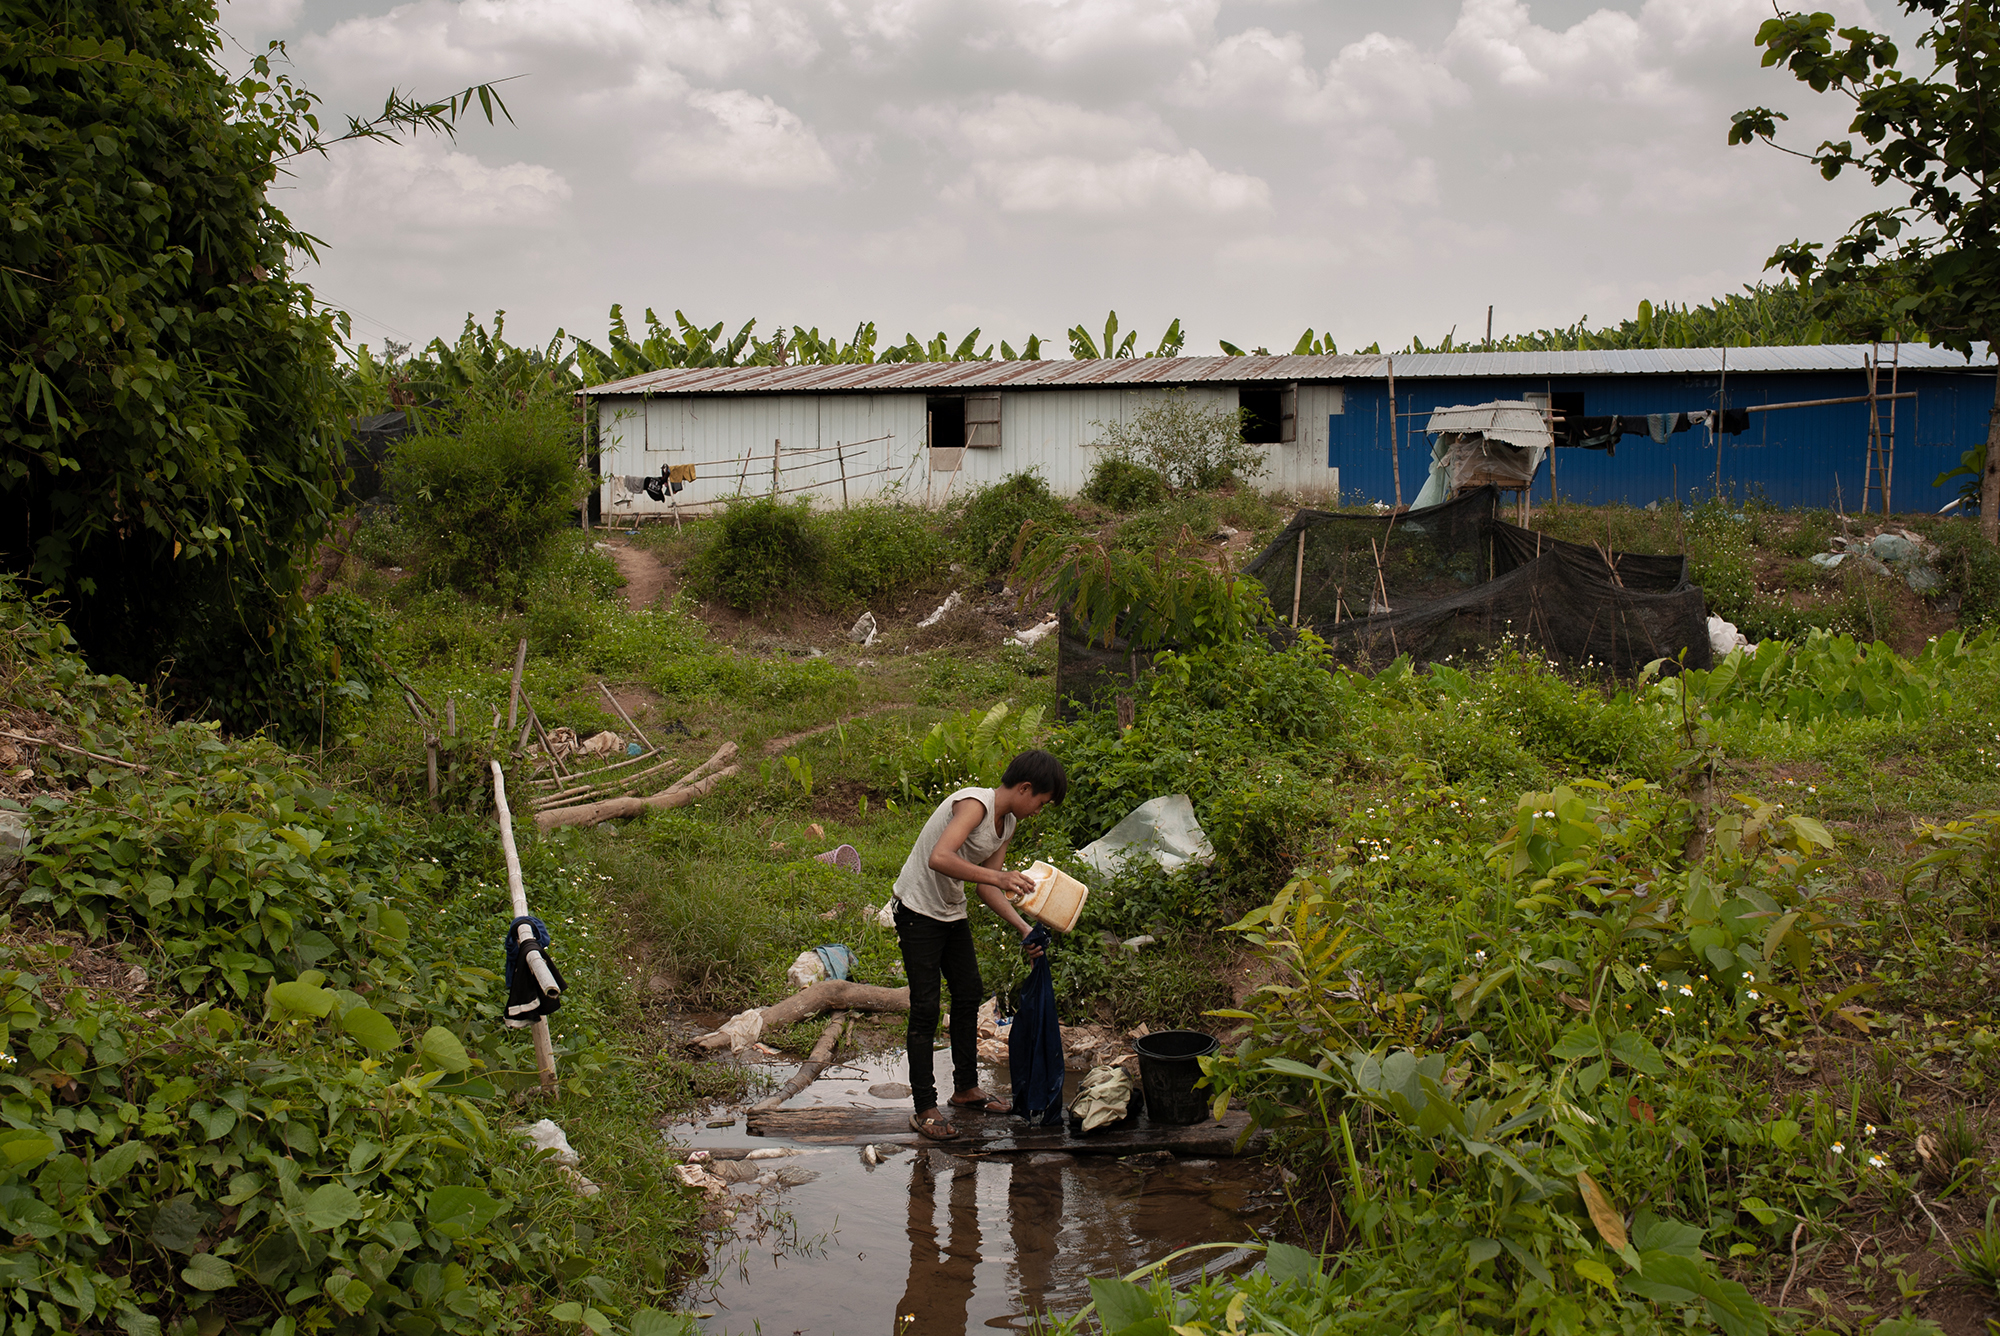 Ton washes his clothes in a small creek below the plantation (Image: Visarut Sankham/China Dialogue)